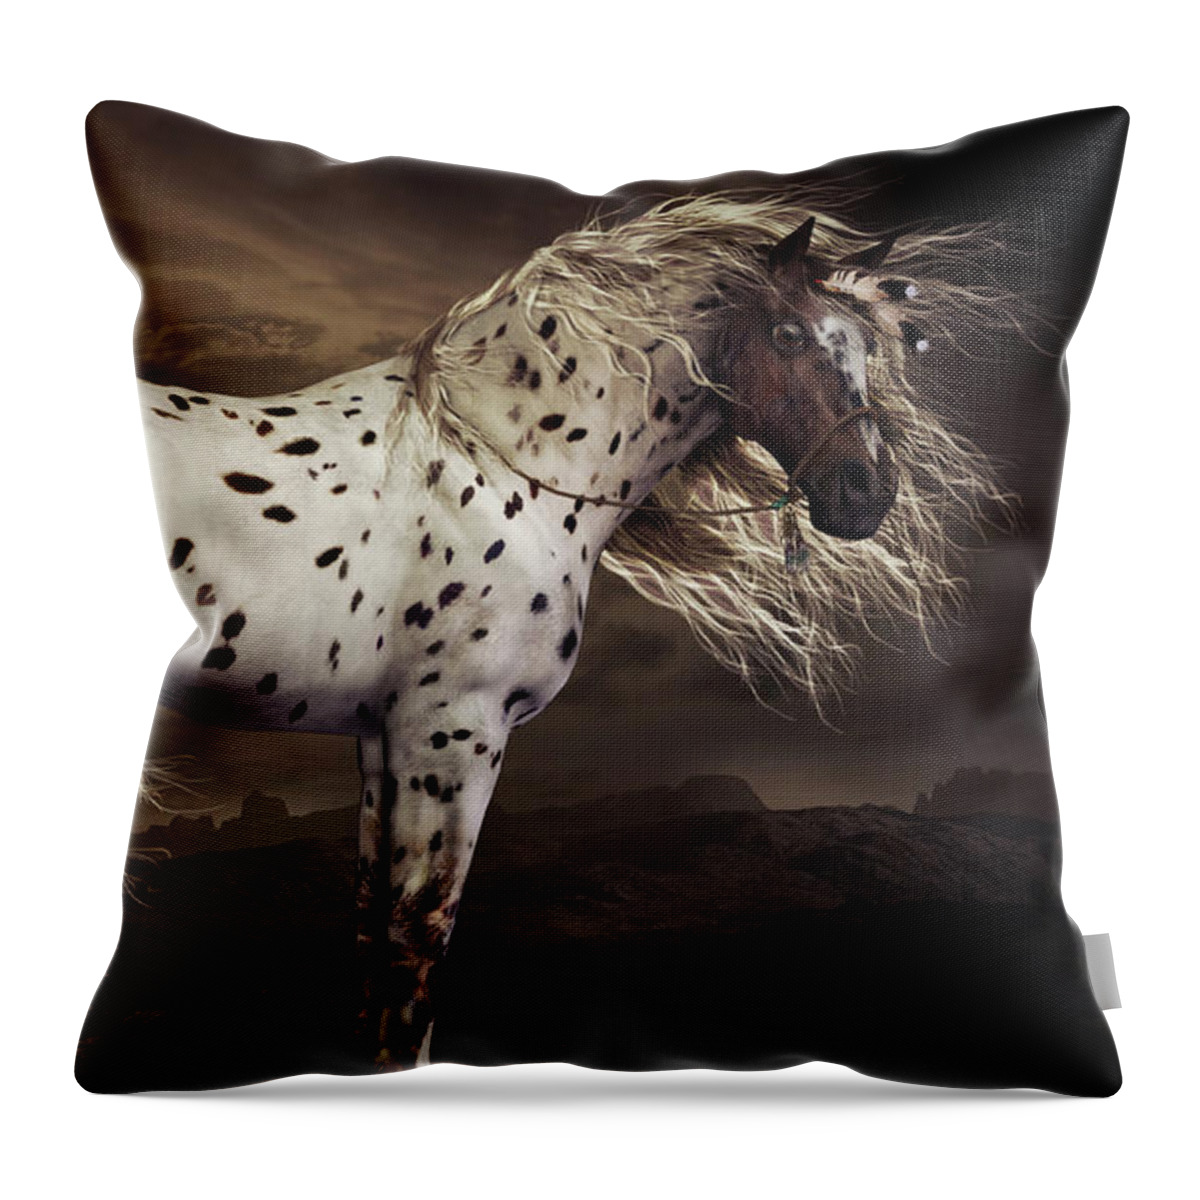 Leopard Appaloosa Throw Pillow featuring the digital art Leopard Appaloosa by Shanina Conway